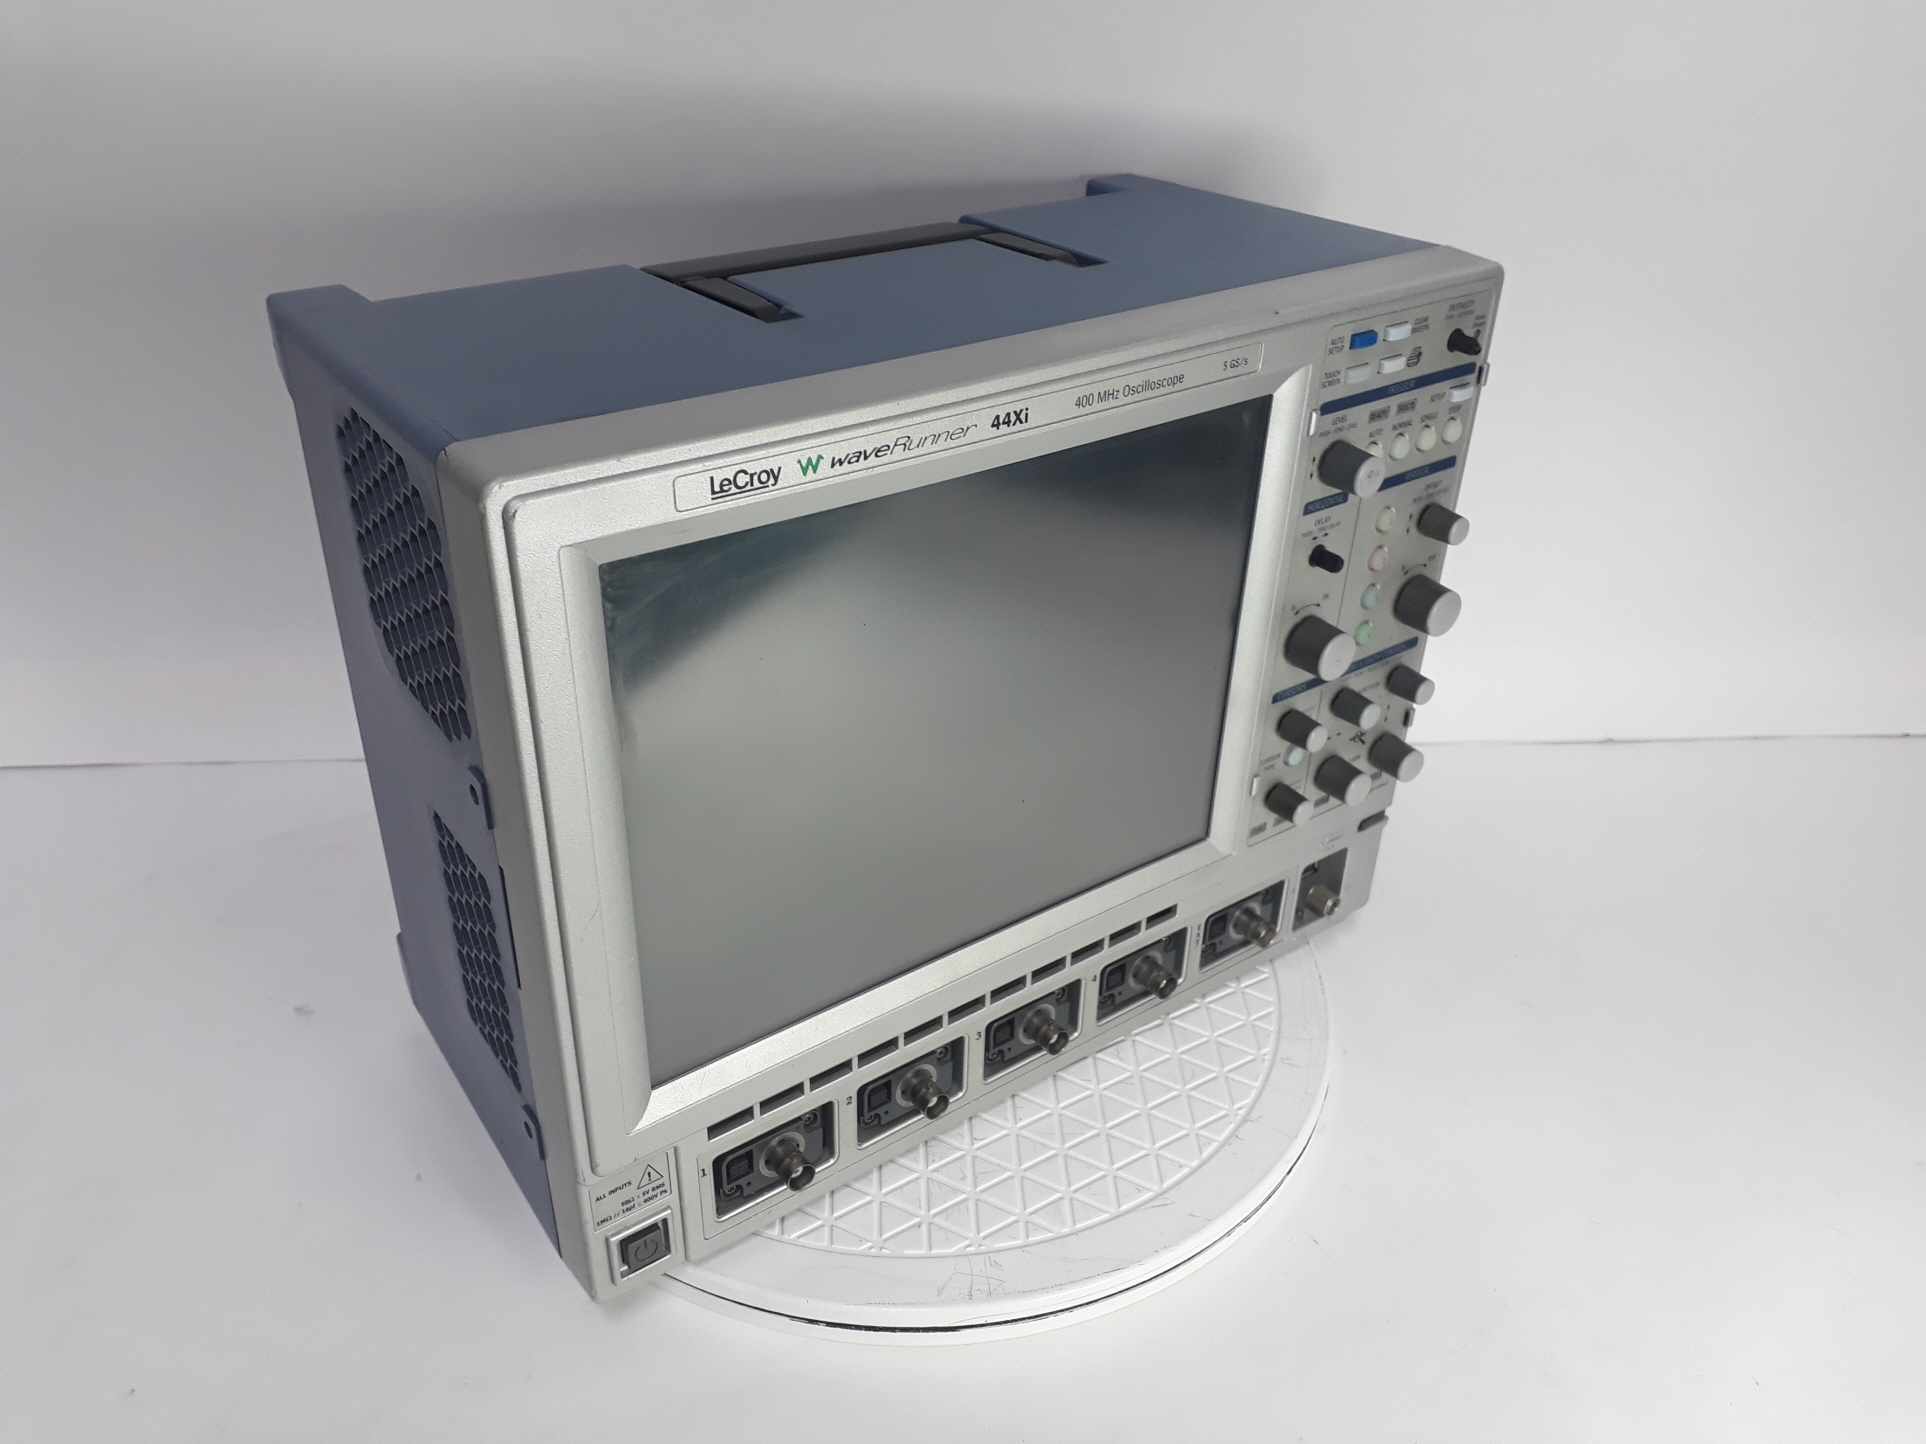 Lecroy/Oscilloscope Digital/Waverunner44Xi